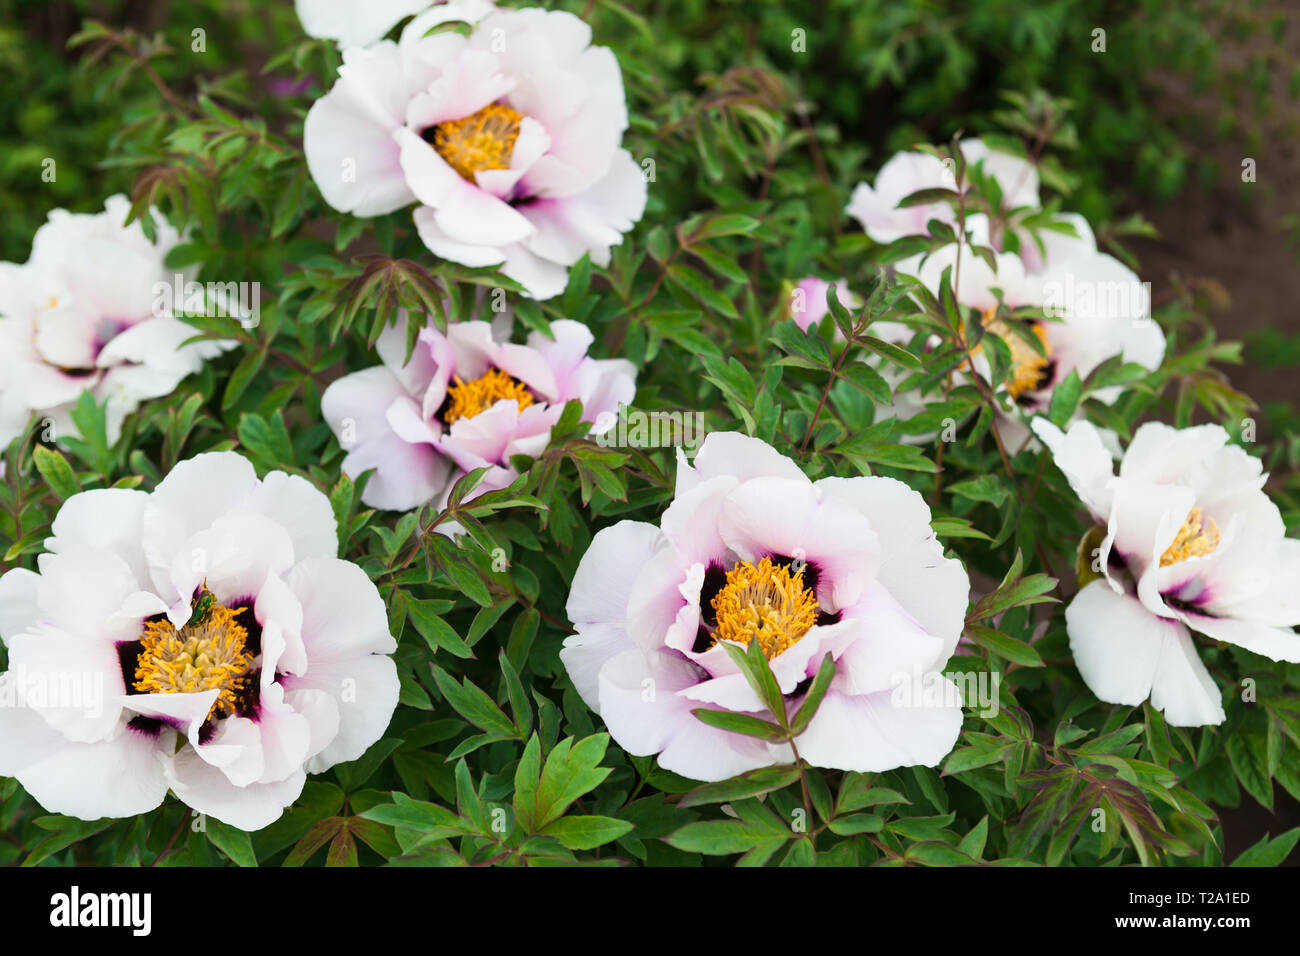 Big white anemone flowers in garden Stock Photo